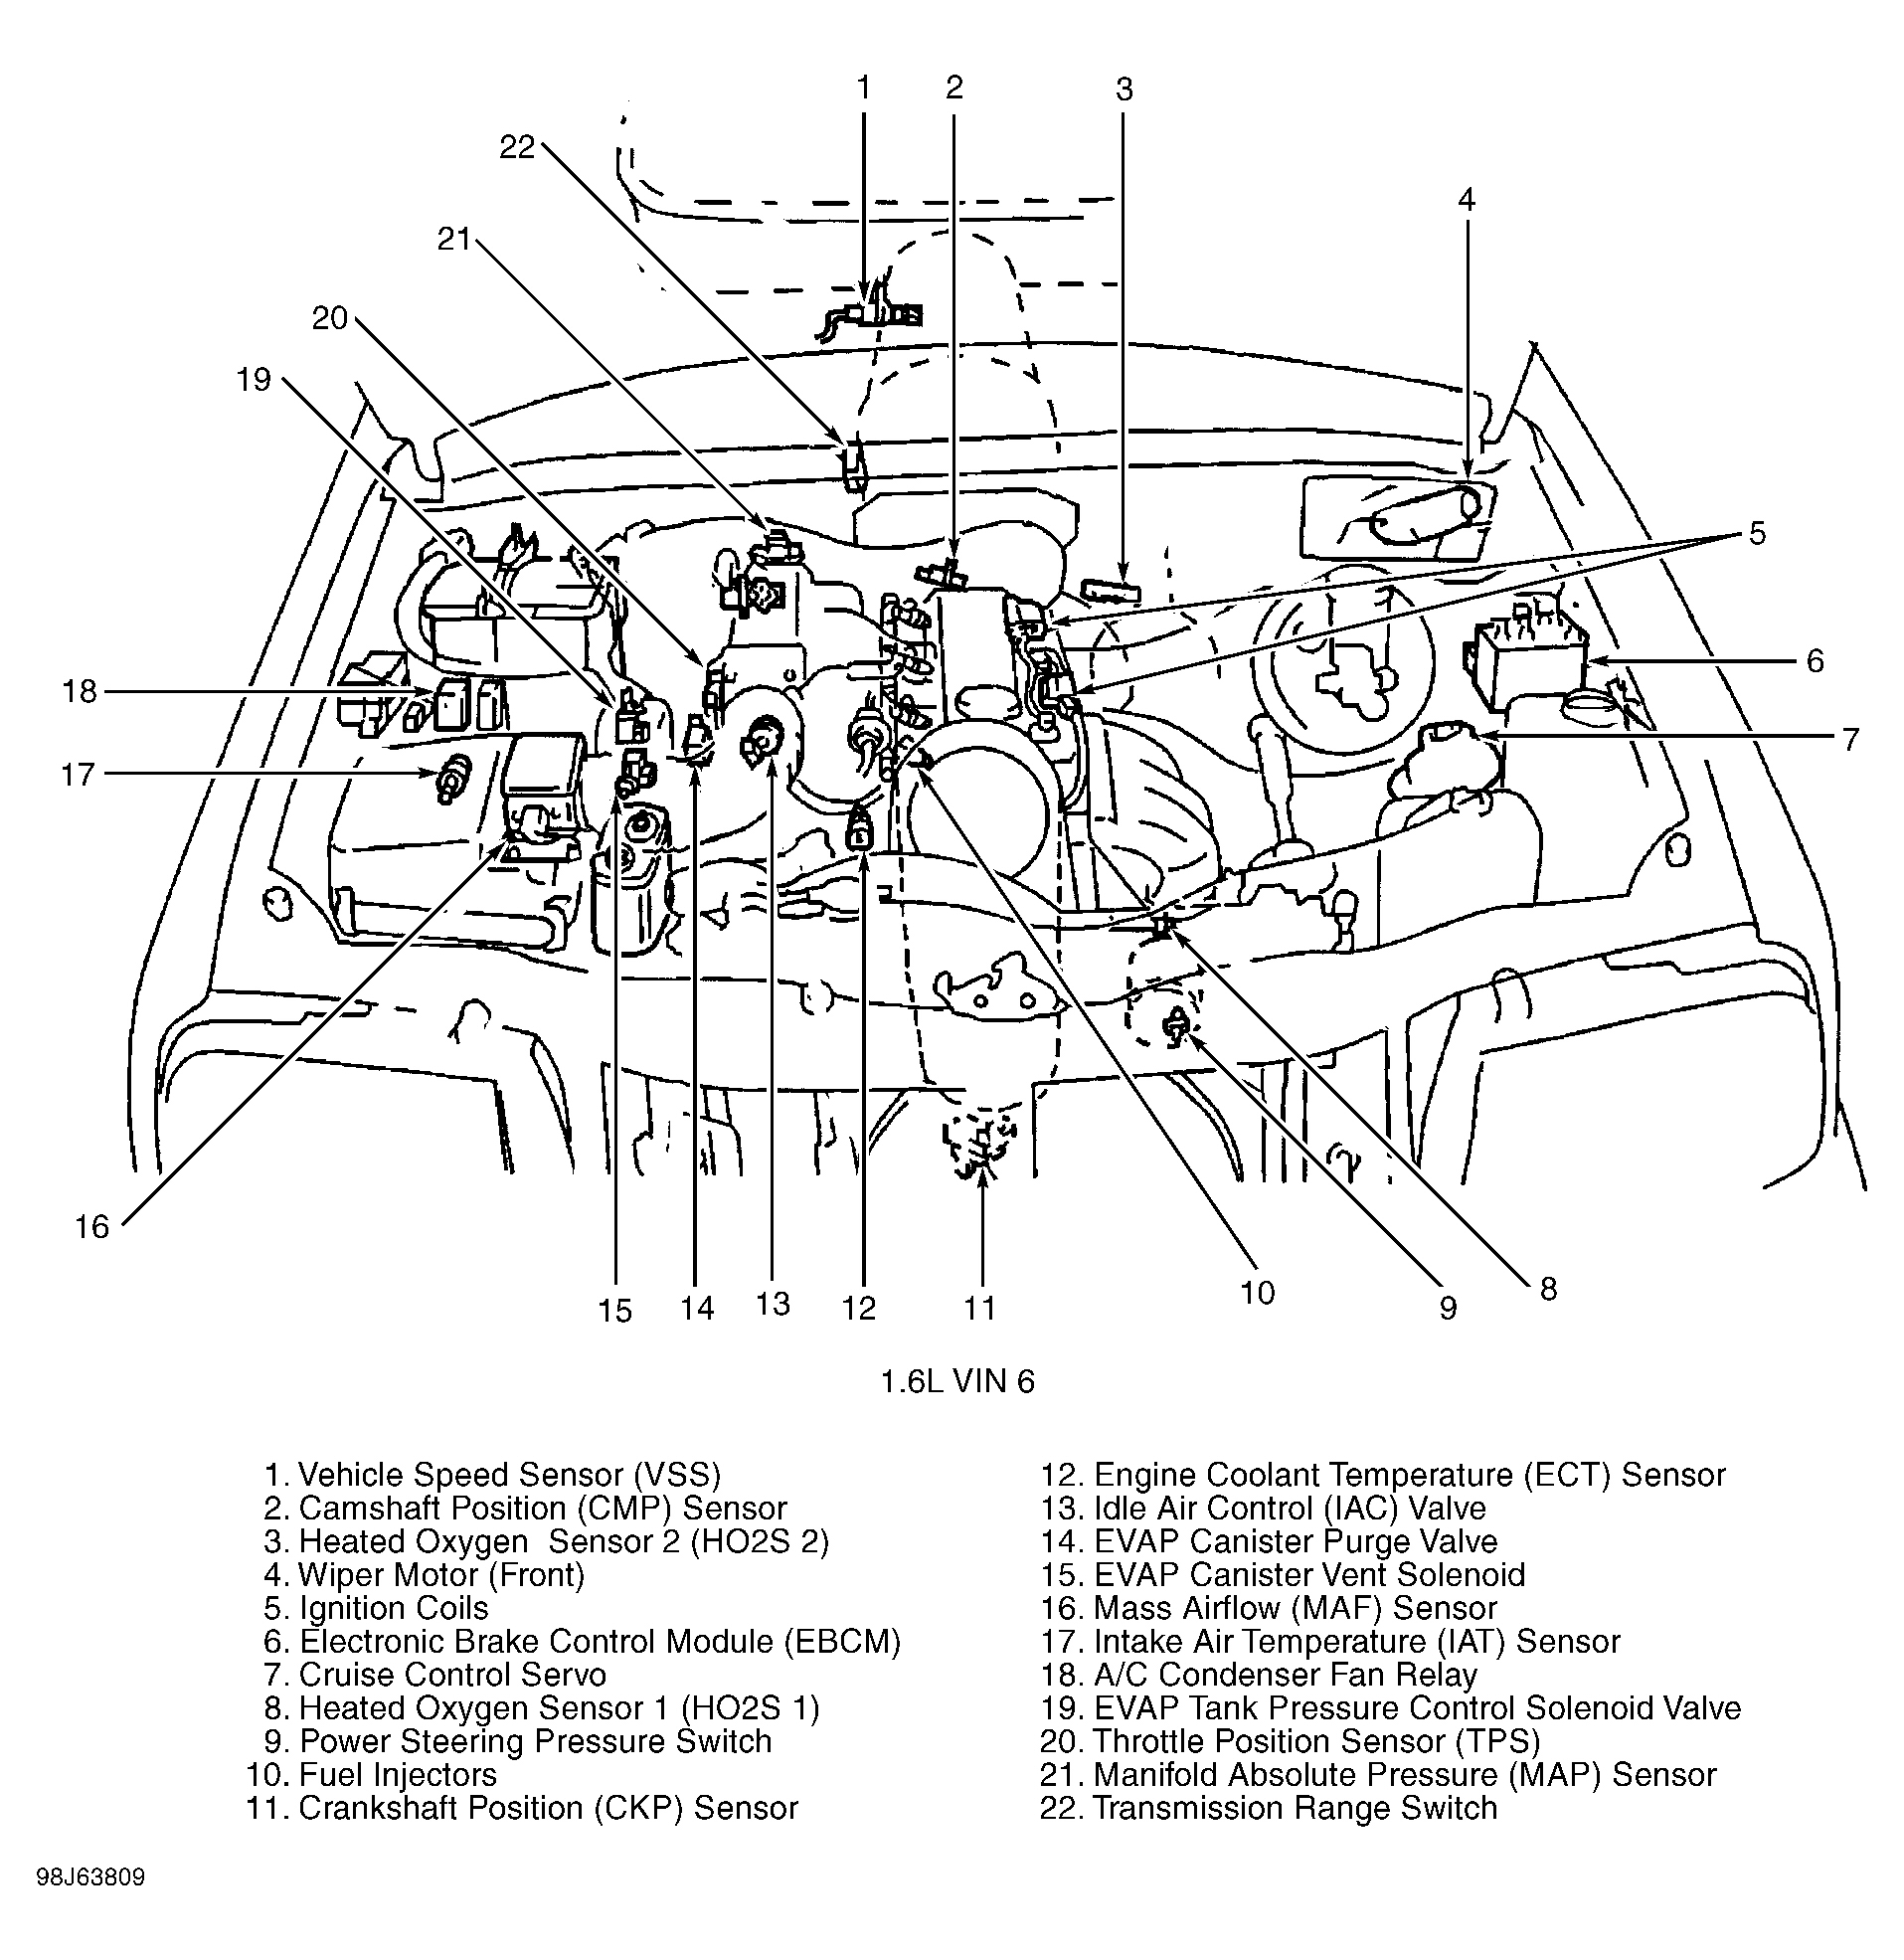 Chevrolet Tracker 1999 - Component Locations -  Engine Compartment (1.6L VIN 6)